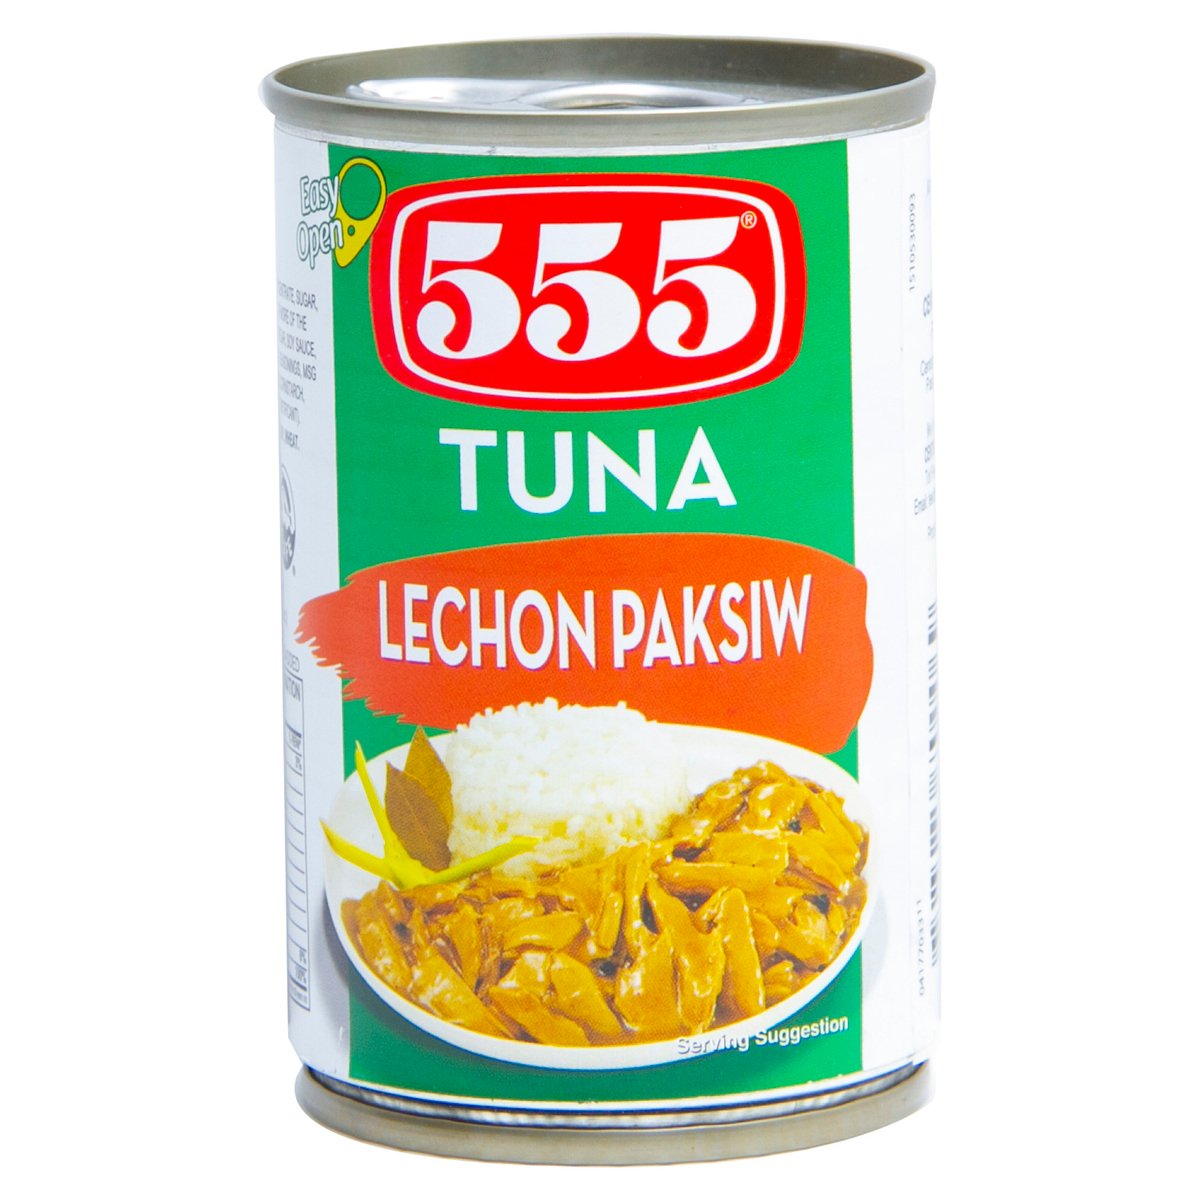 Buy 555 Tuna Lechon Paksiw 155 g Online at Best Price | Canned Tuna | Lulu UAE in UAE